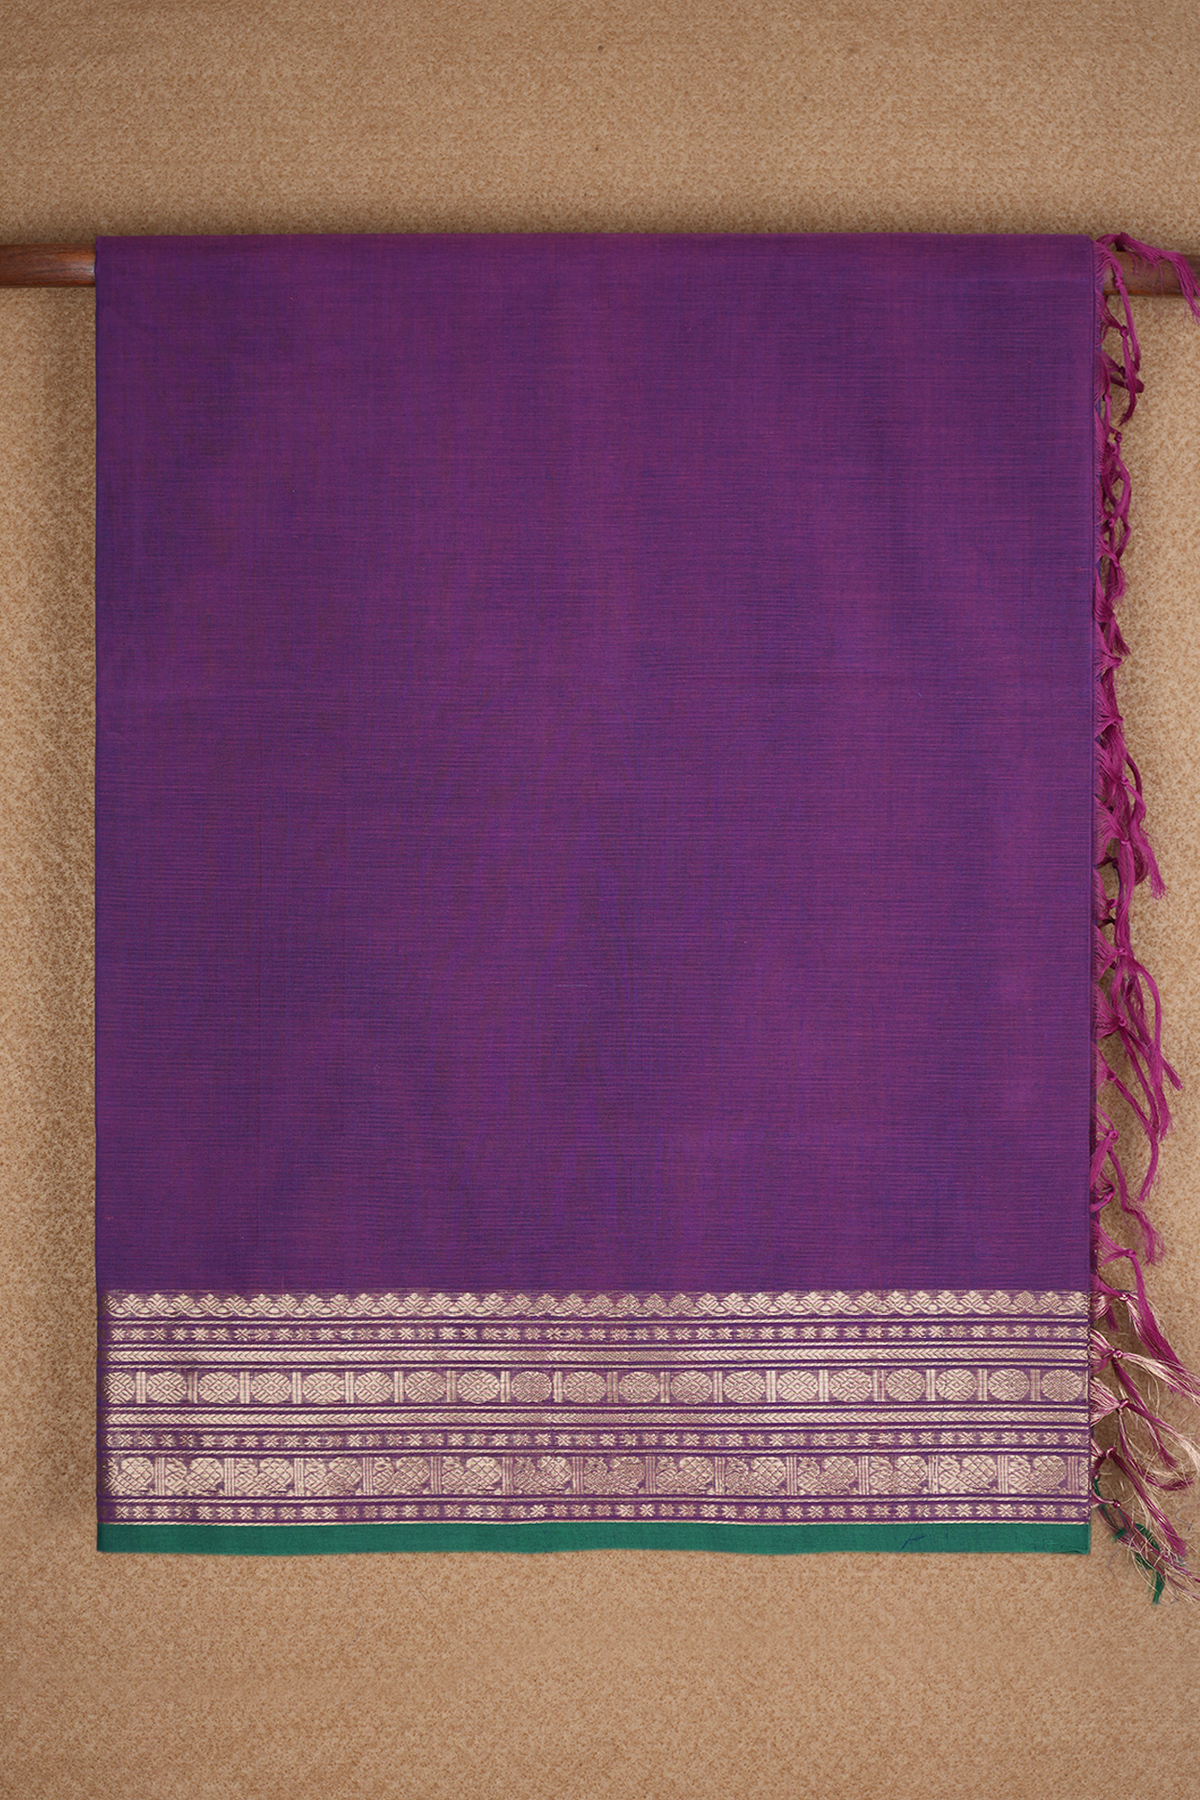 Peacock And Rudraksh Border Purple Coimbatore Cotton Saree